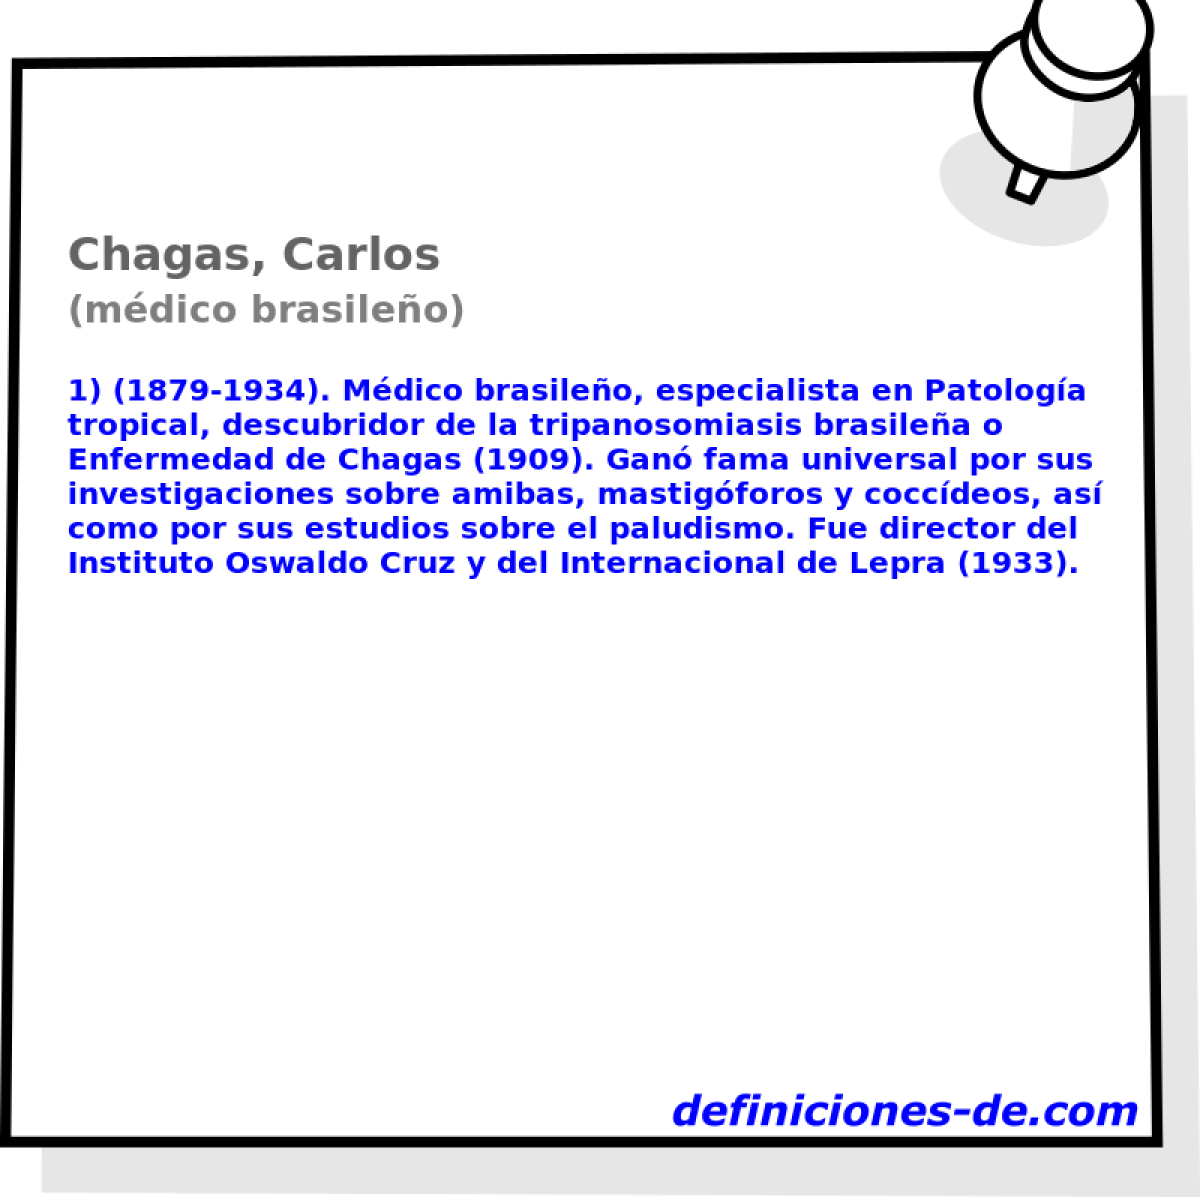 Chagas, Carlos (mdico brasileo)